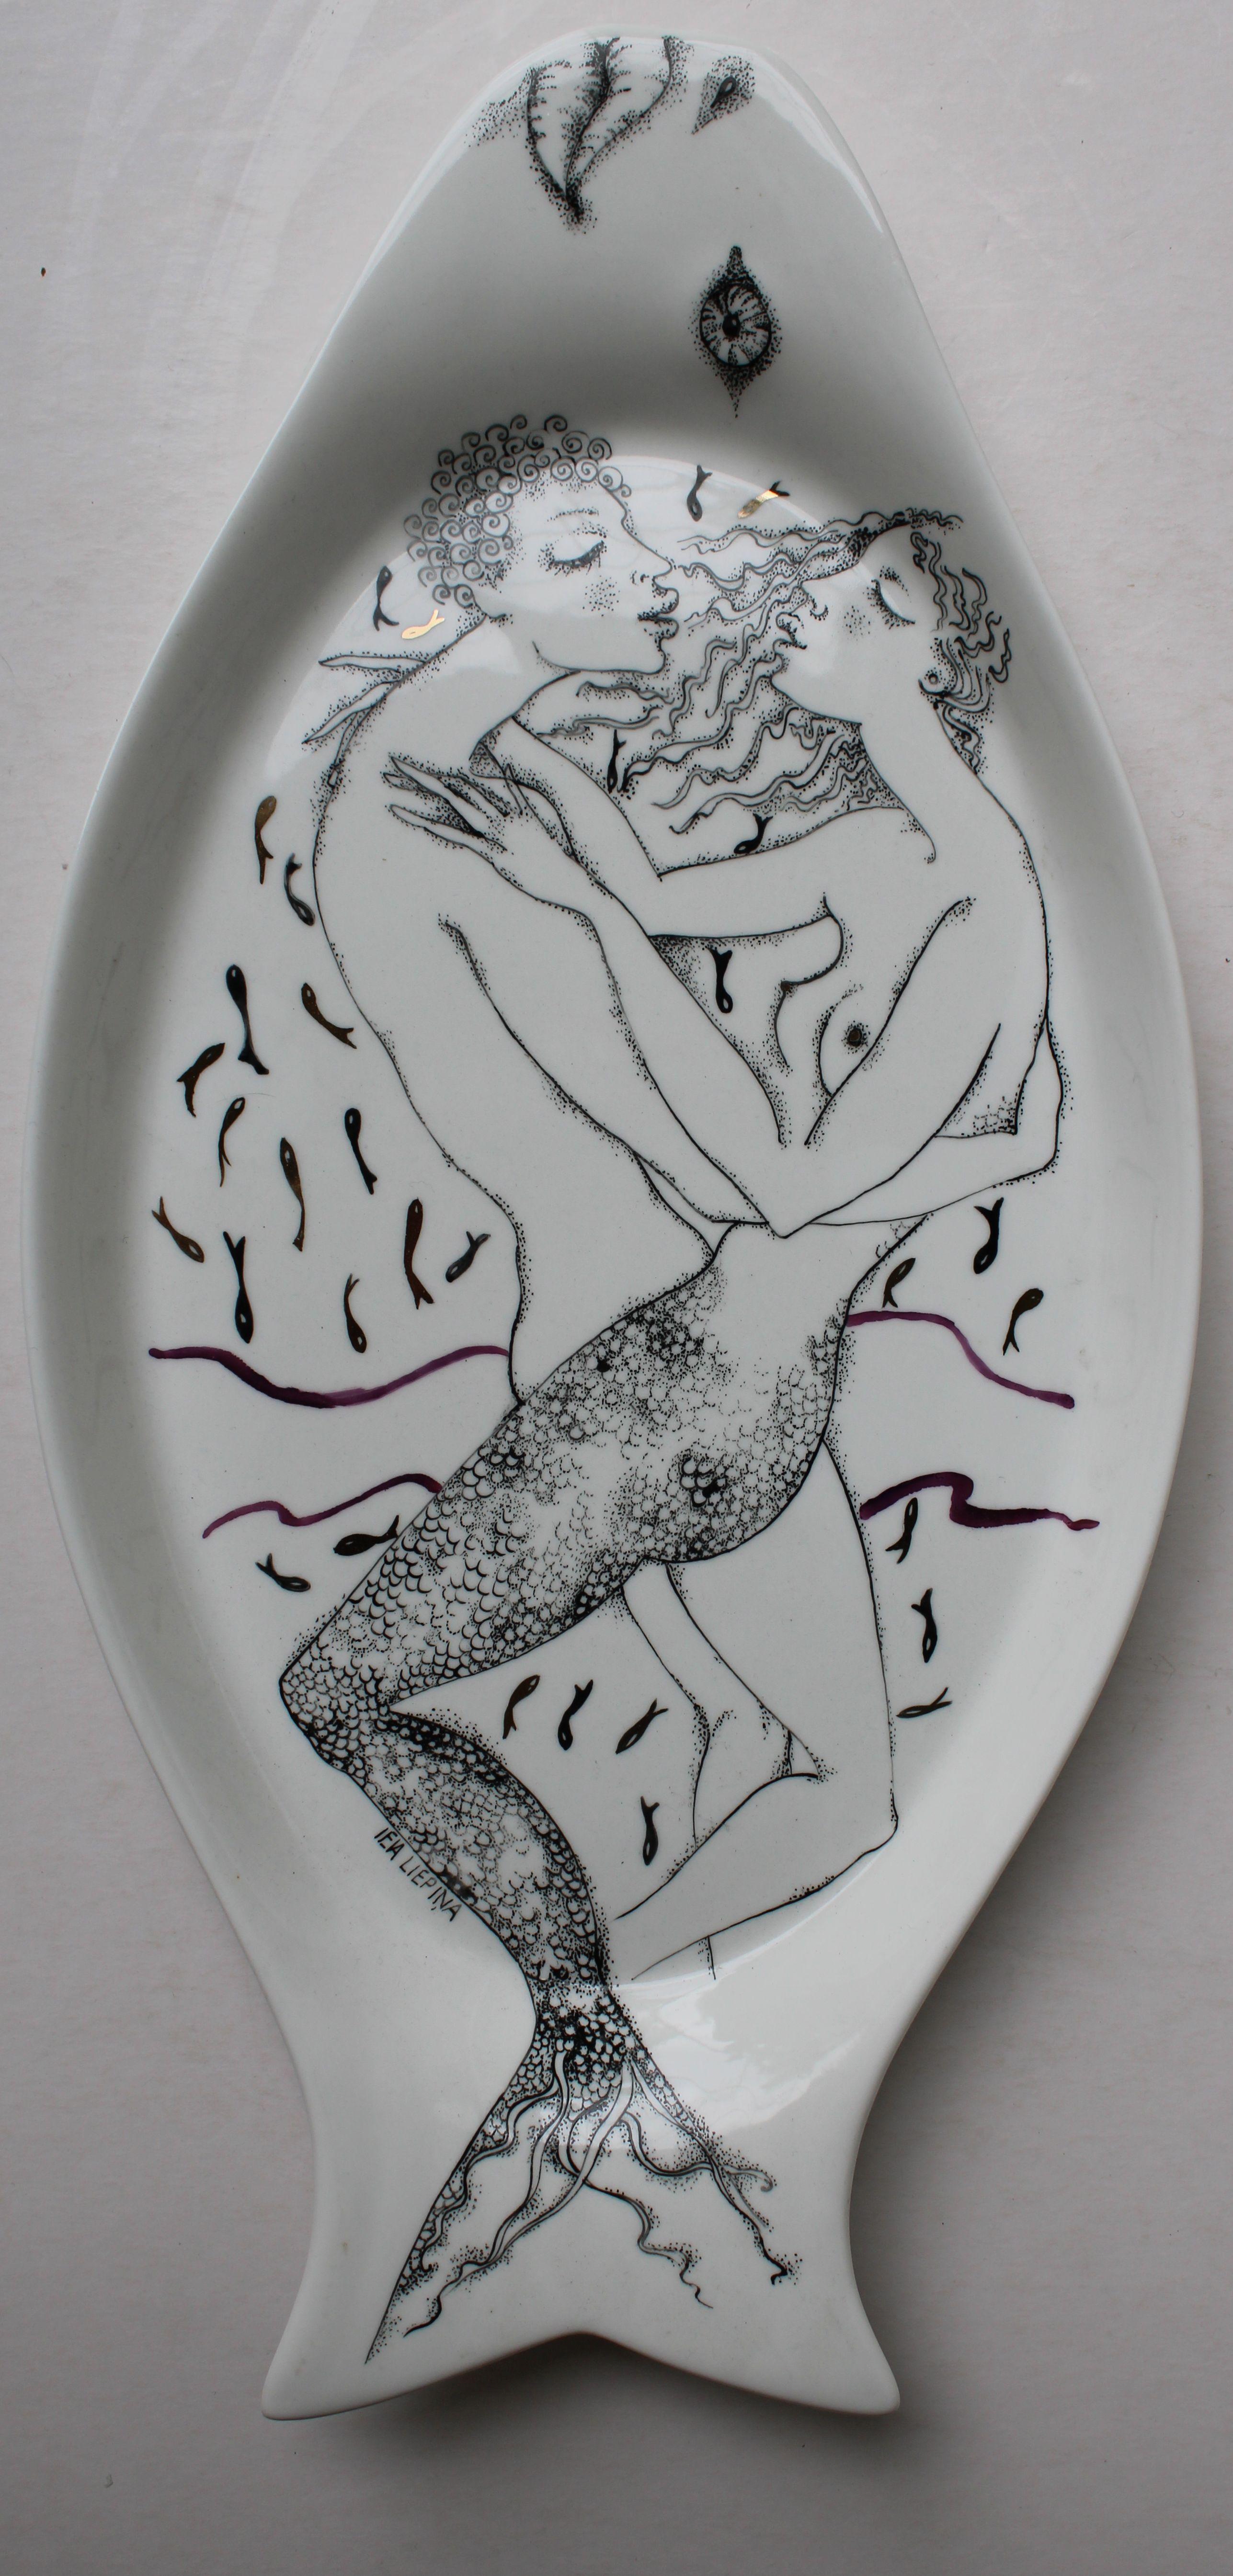  Water  2009, painted porcelain plate, 39х19х2.5 cm - Art by Ieva Liepina